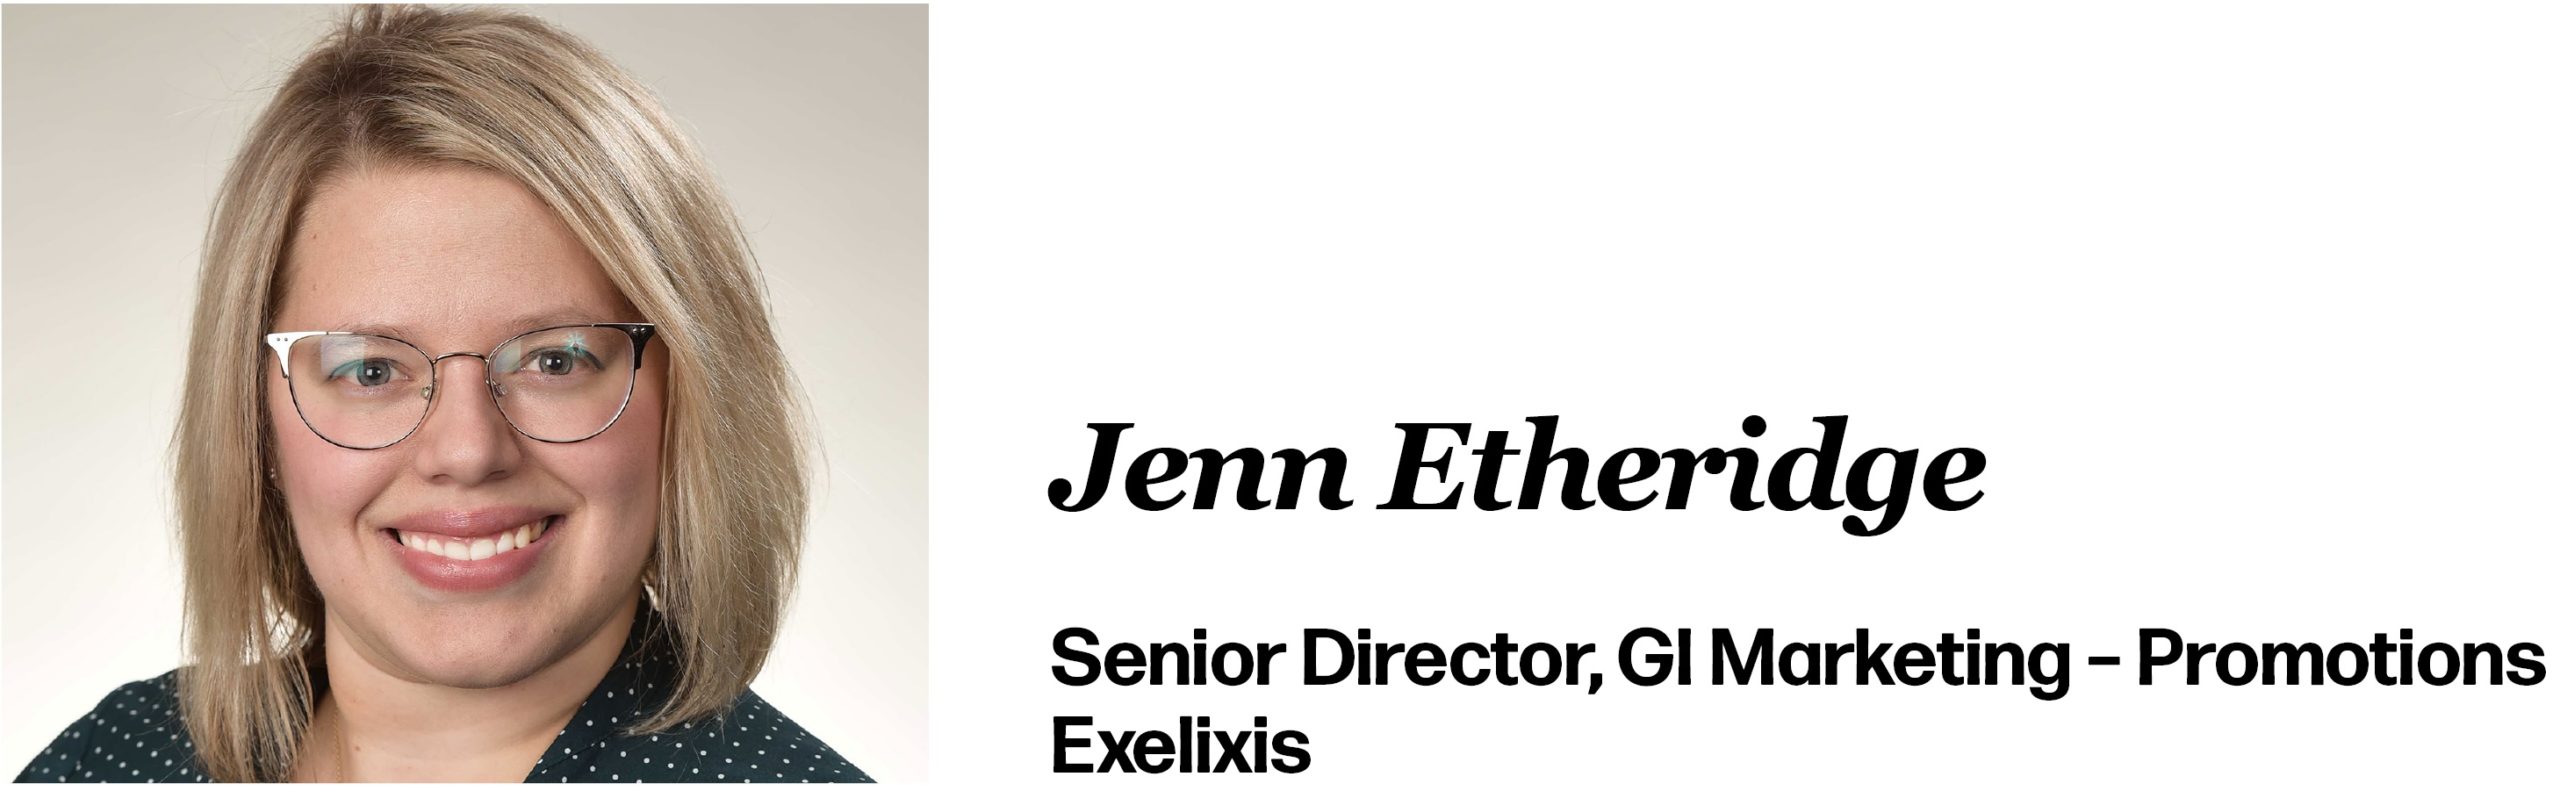 Jenn Etheridge is Senior Director, GI Marketing – Promotions at Exelixis.